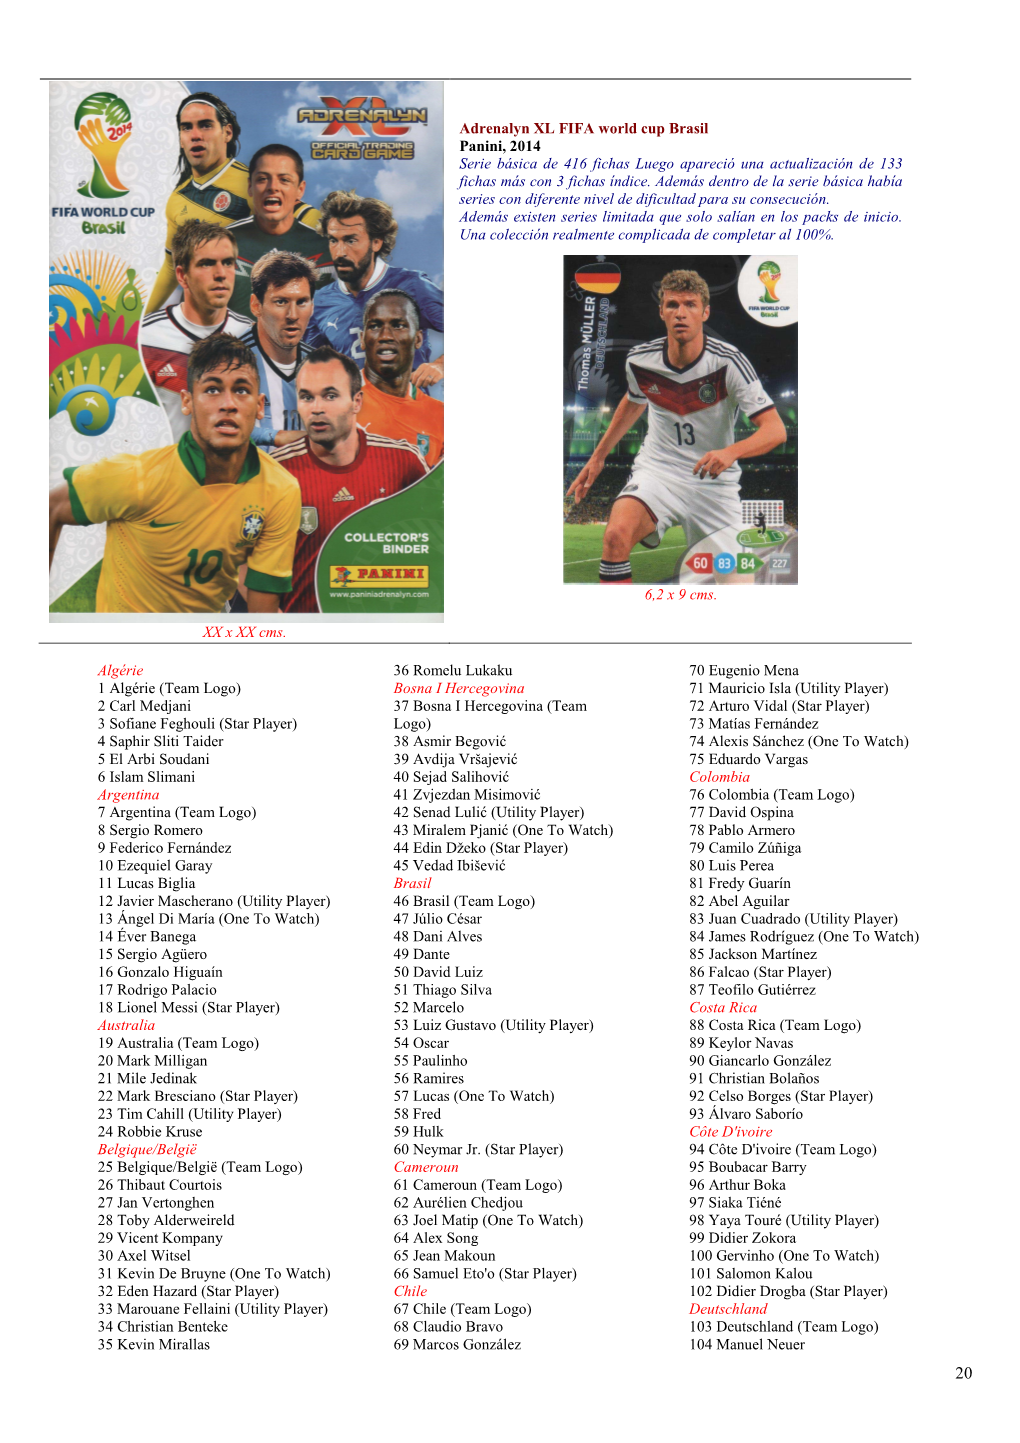 Adrenalyn XL 2014 FIFA World Cup Brasil